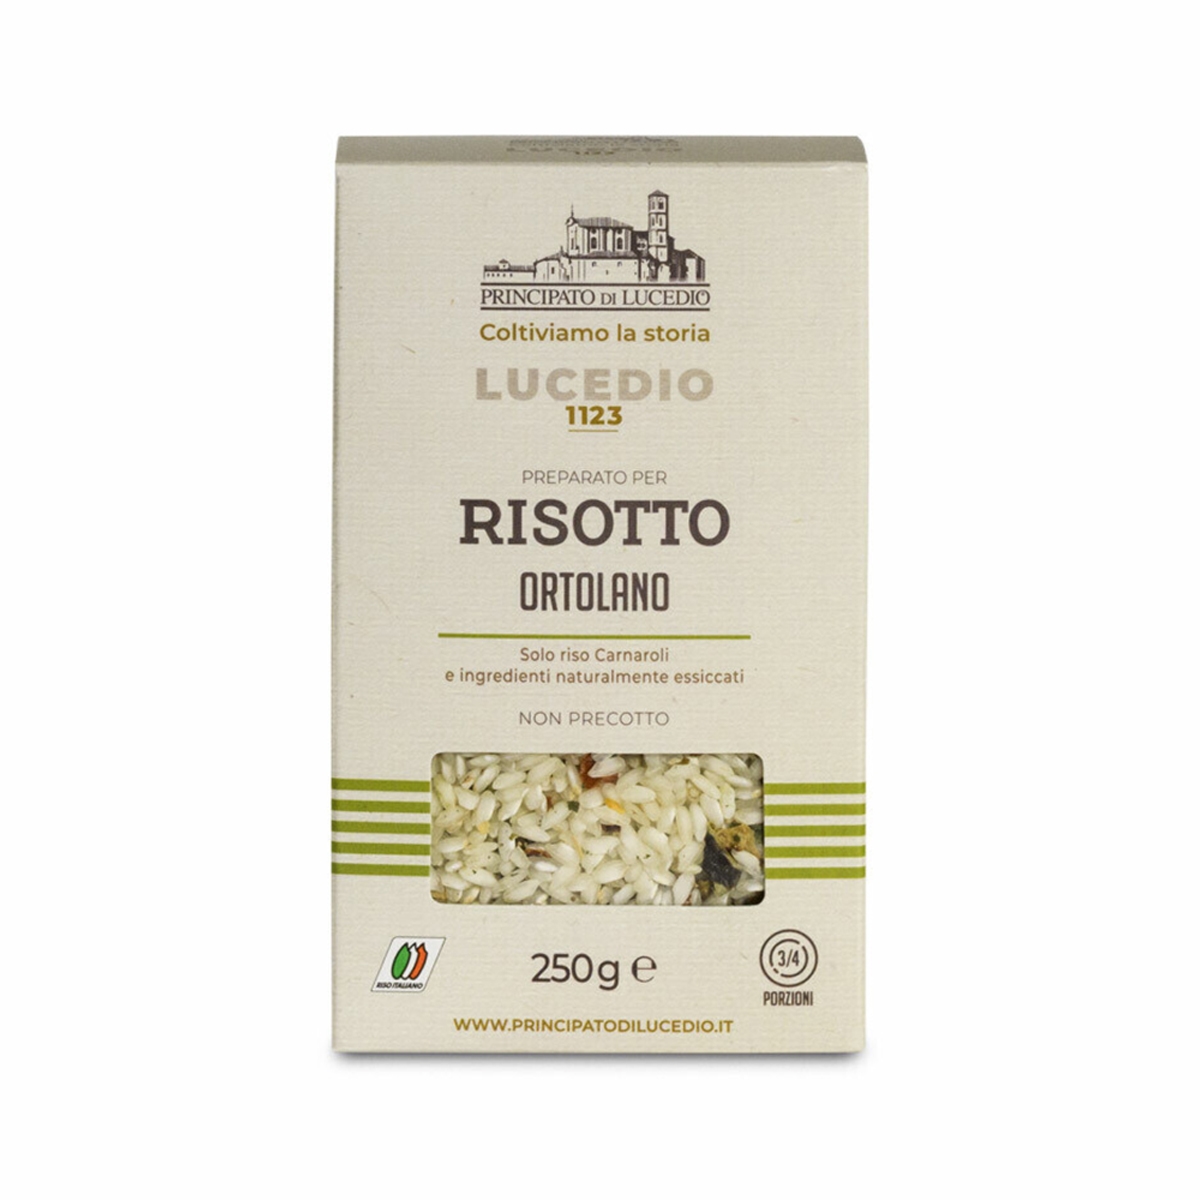 Ortolano Risotto - 250 g - Unter Schutzatmosphäre verpackt